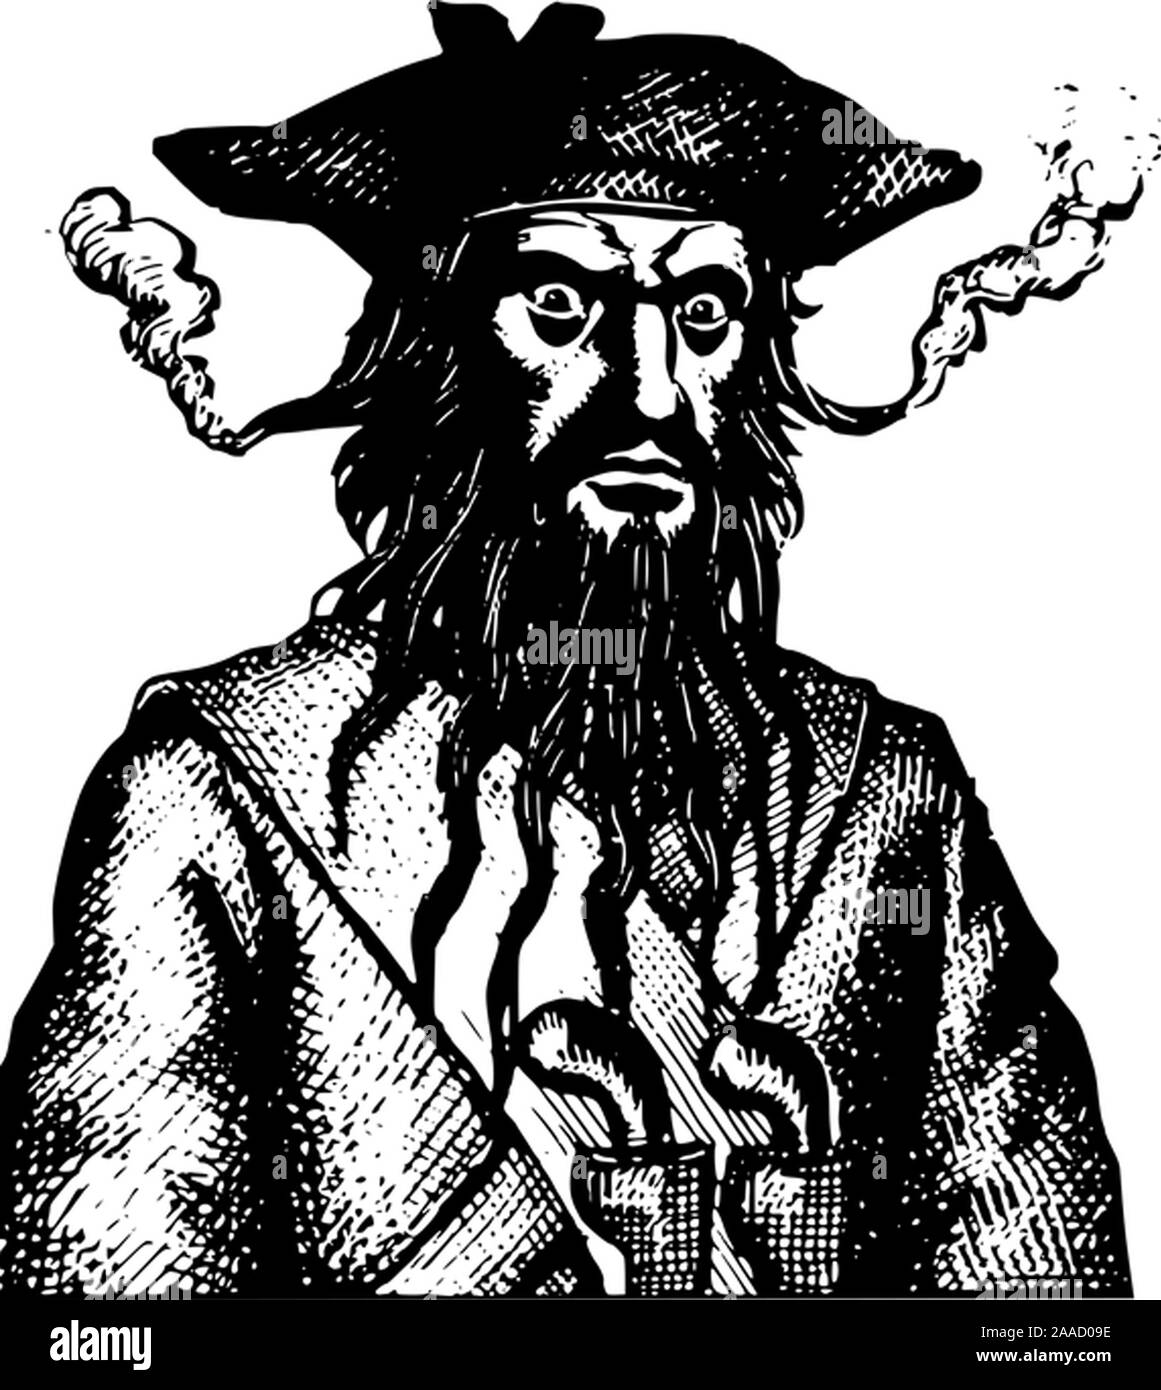 vintage Blackbeard pirate illustration portrait Stock Photo